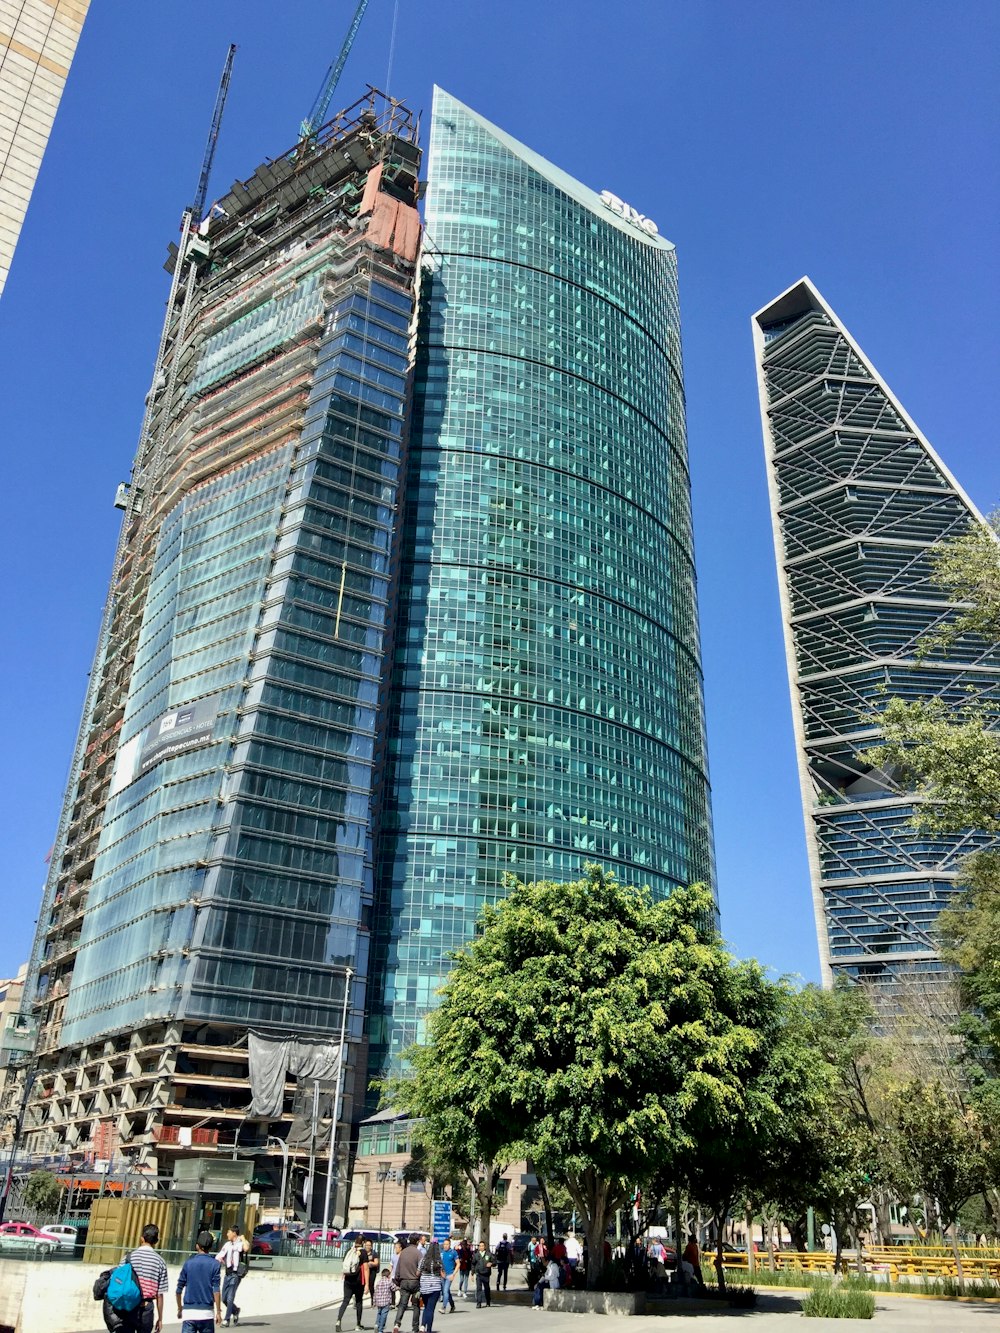 Edificio de gran altura con paredes de vidrio azul